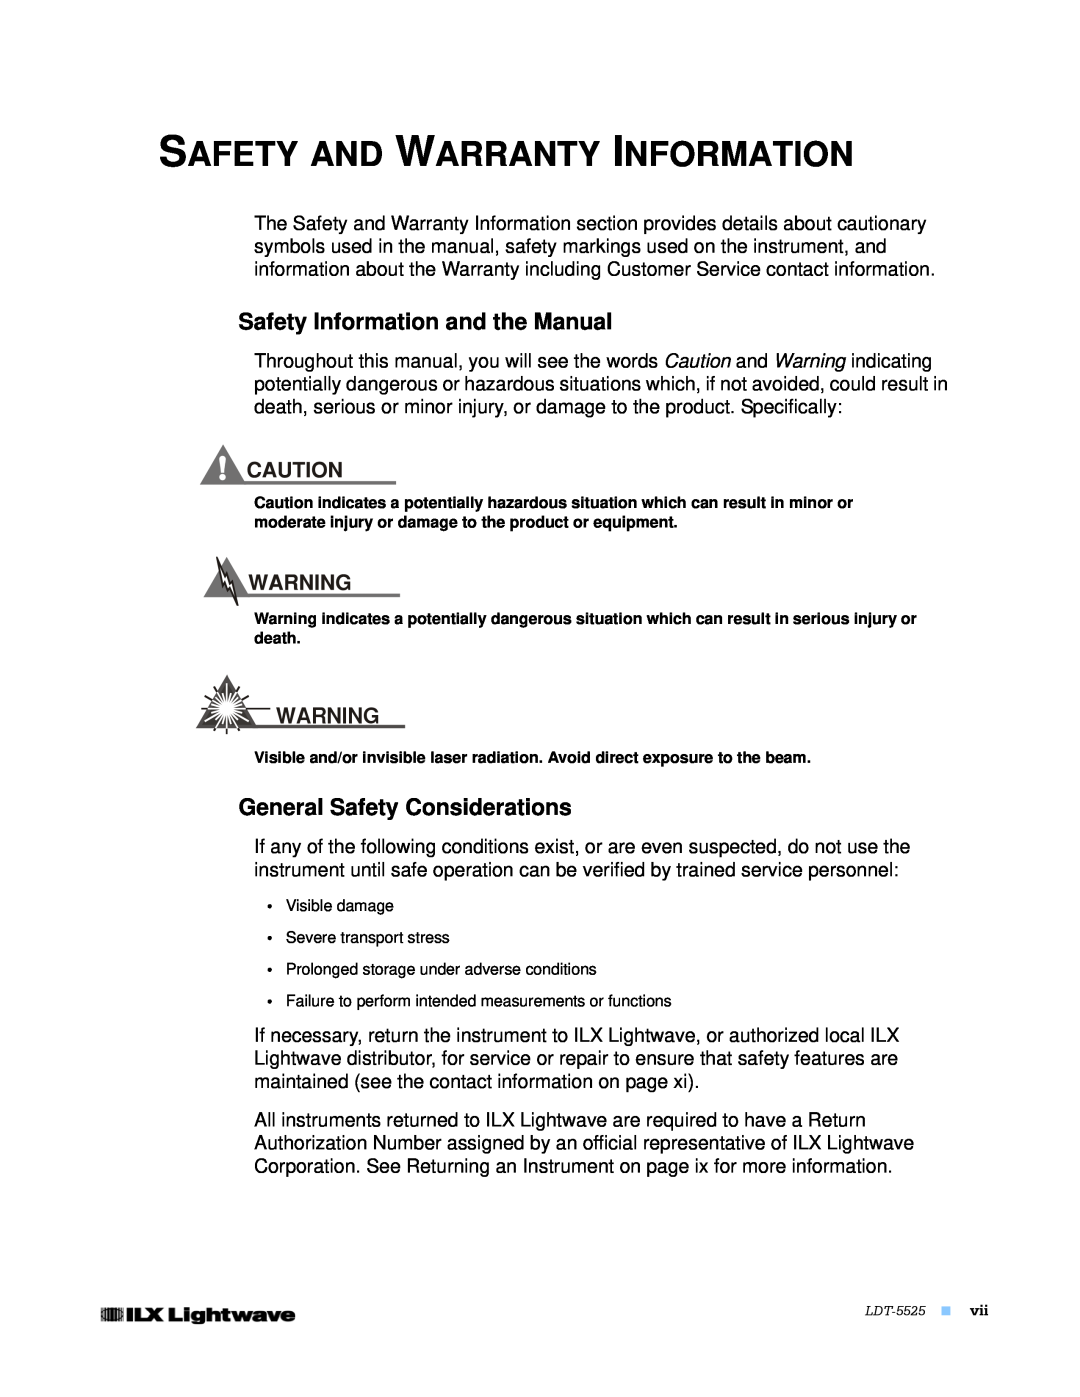 Lightwave Communications LDT-5525 manual Safety And Warranty Information, Safety Information and the Manual 